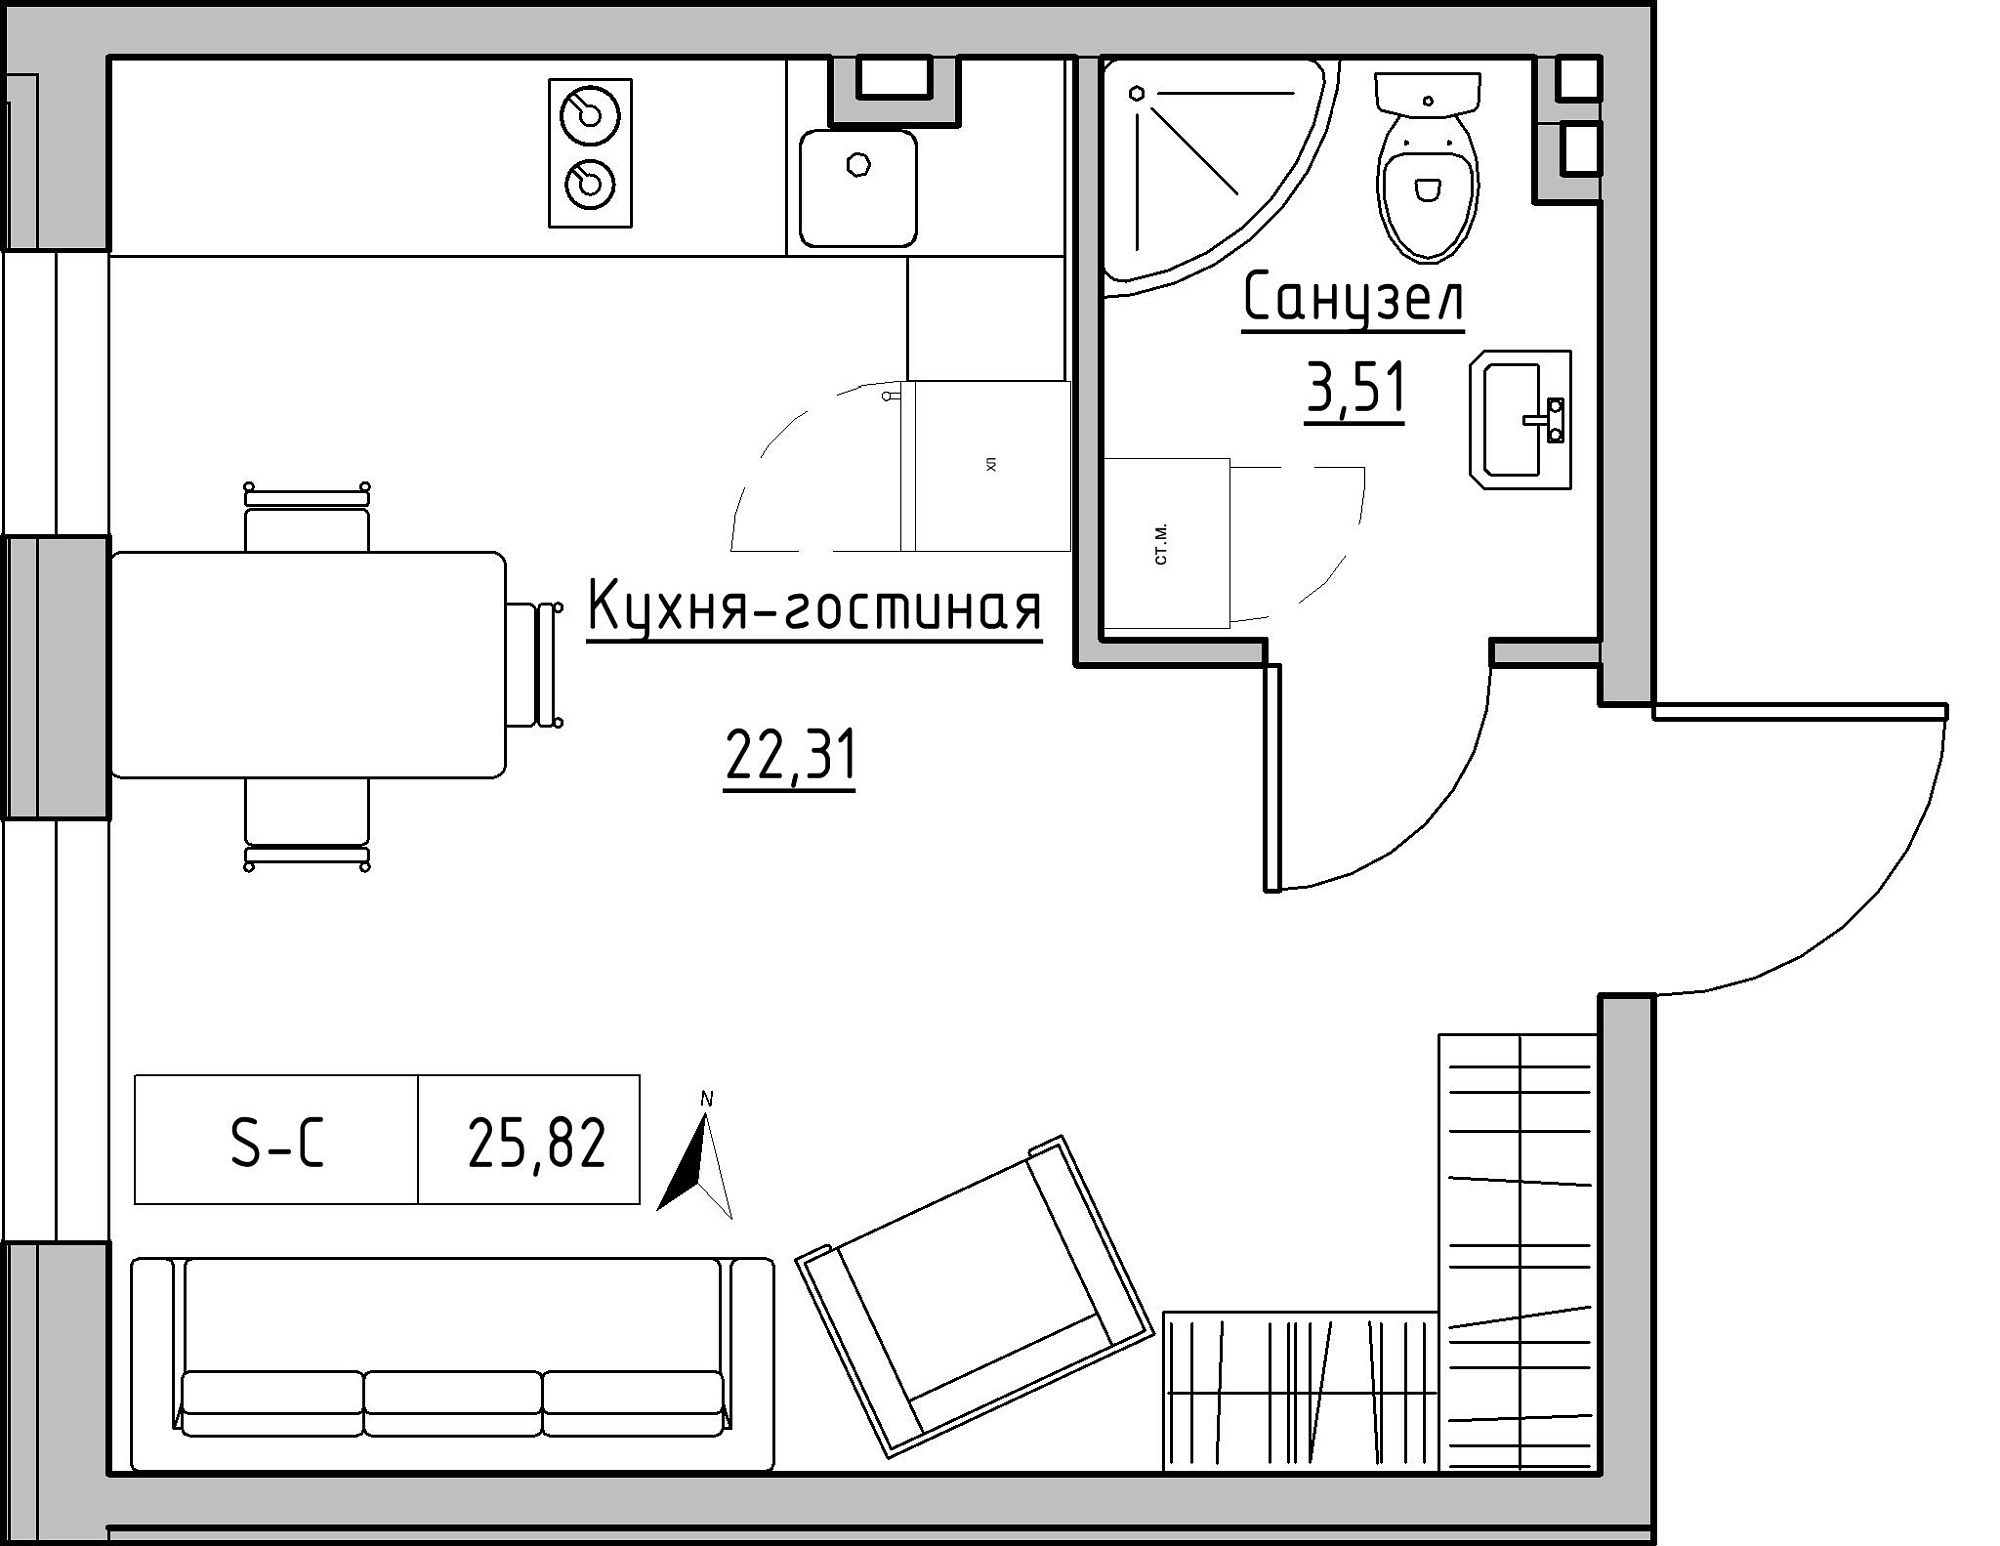 Planning Smart flats area 25.82m2, KS-024-01/0009.